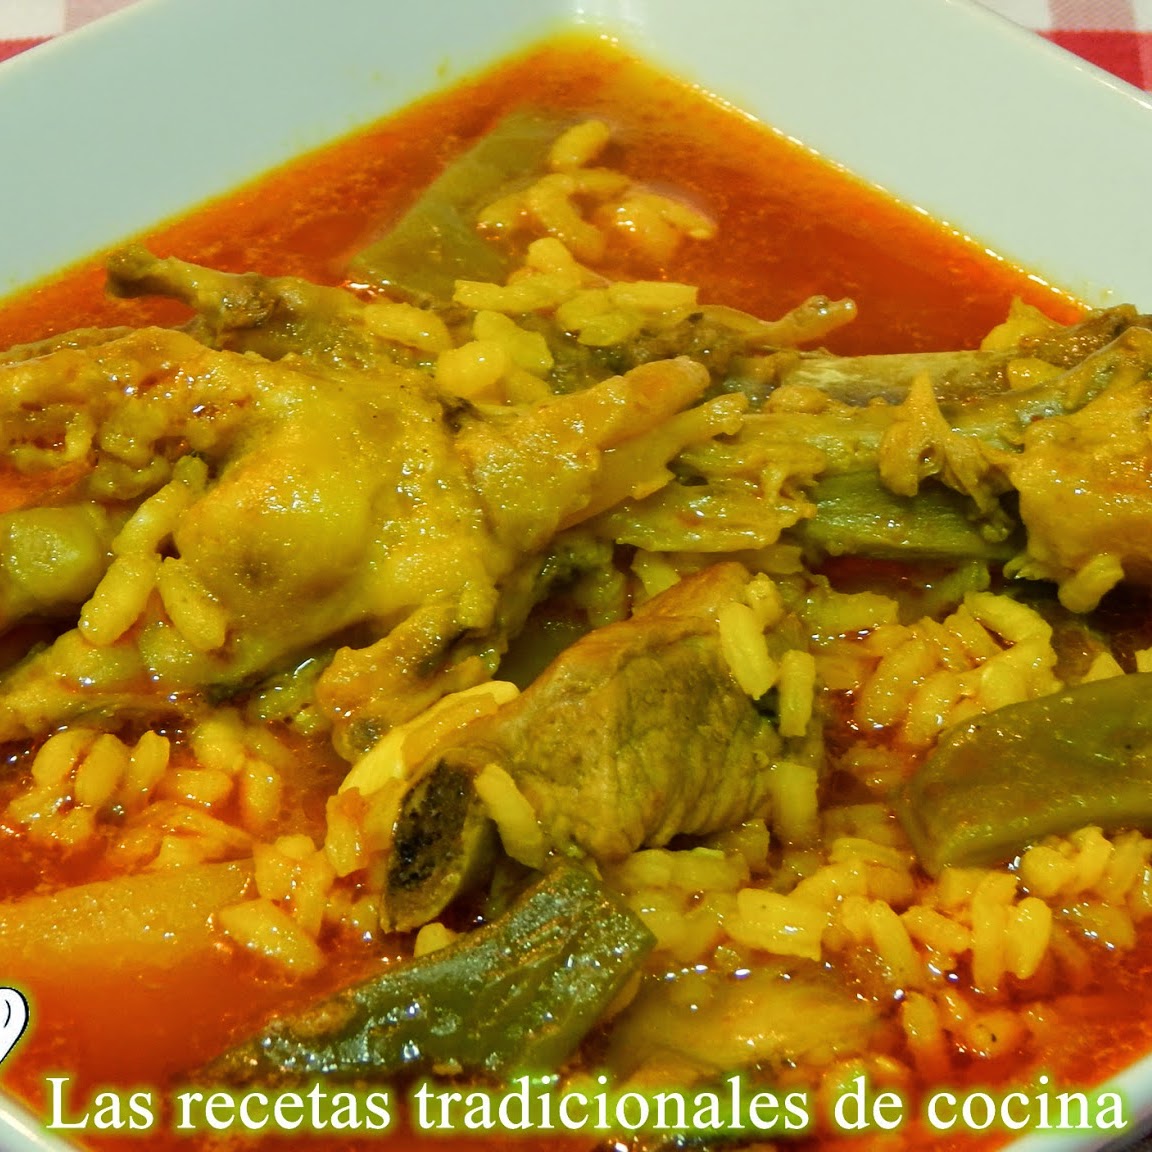 noviembre 2014 - Recetas de cocina con sabor tradicional